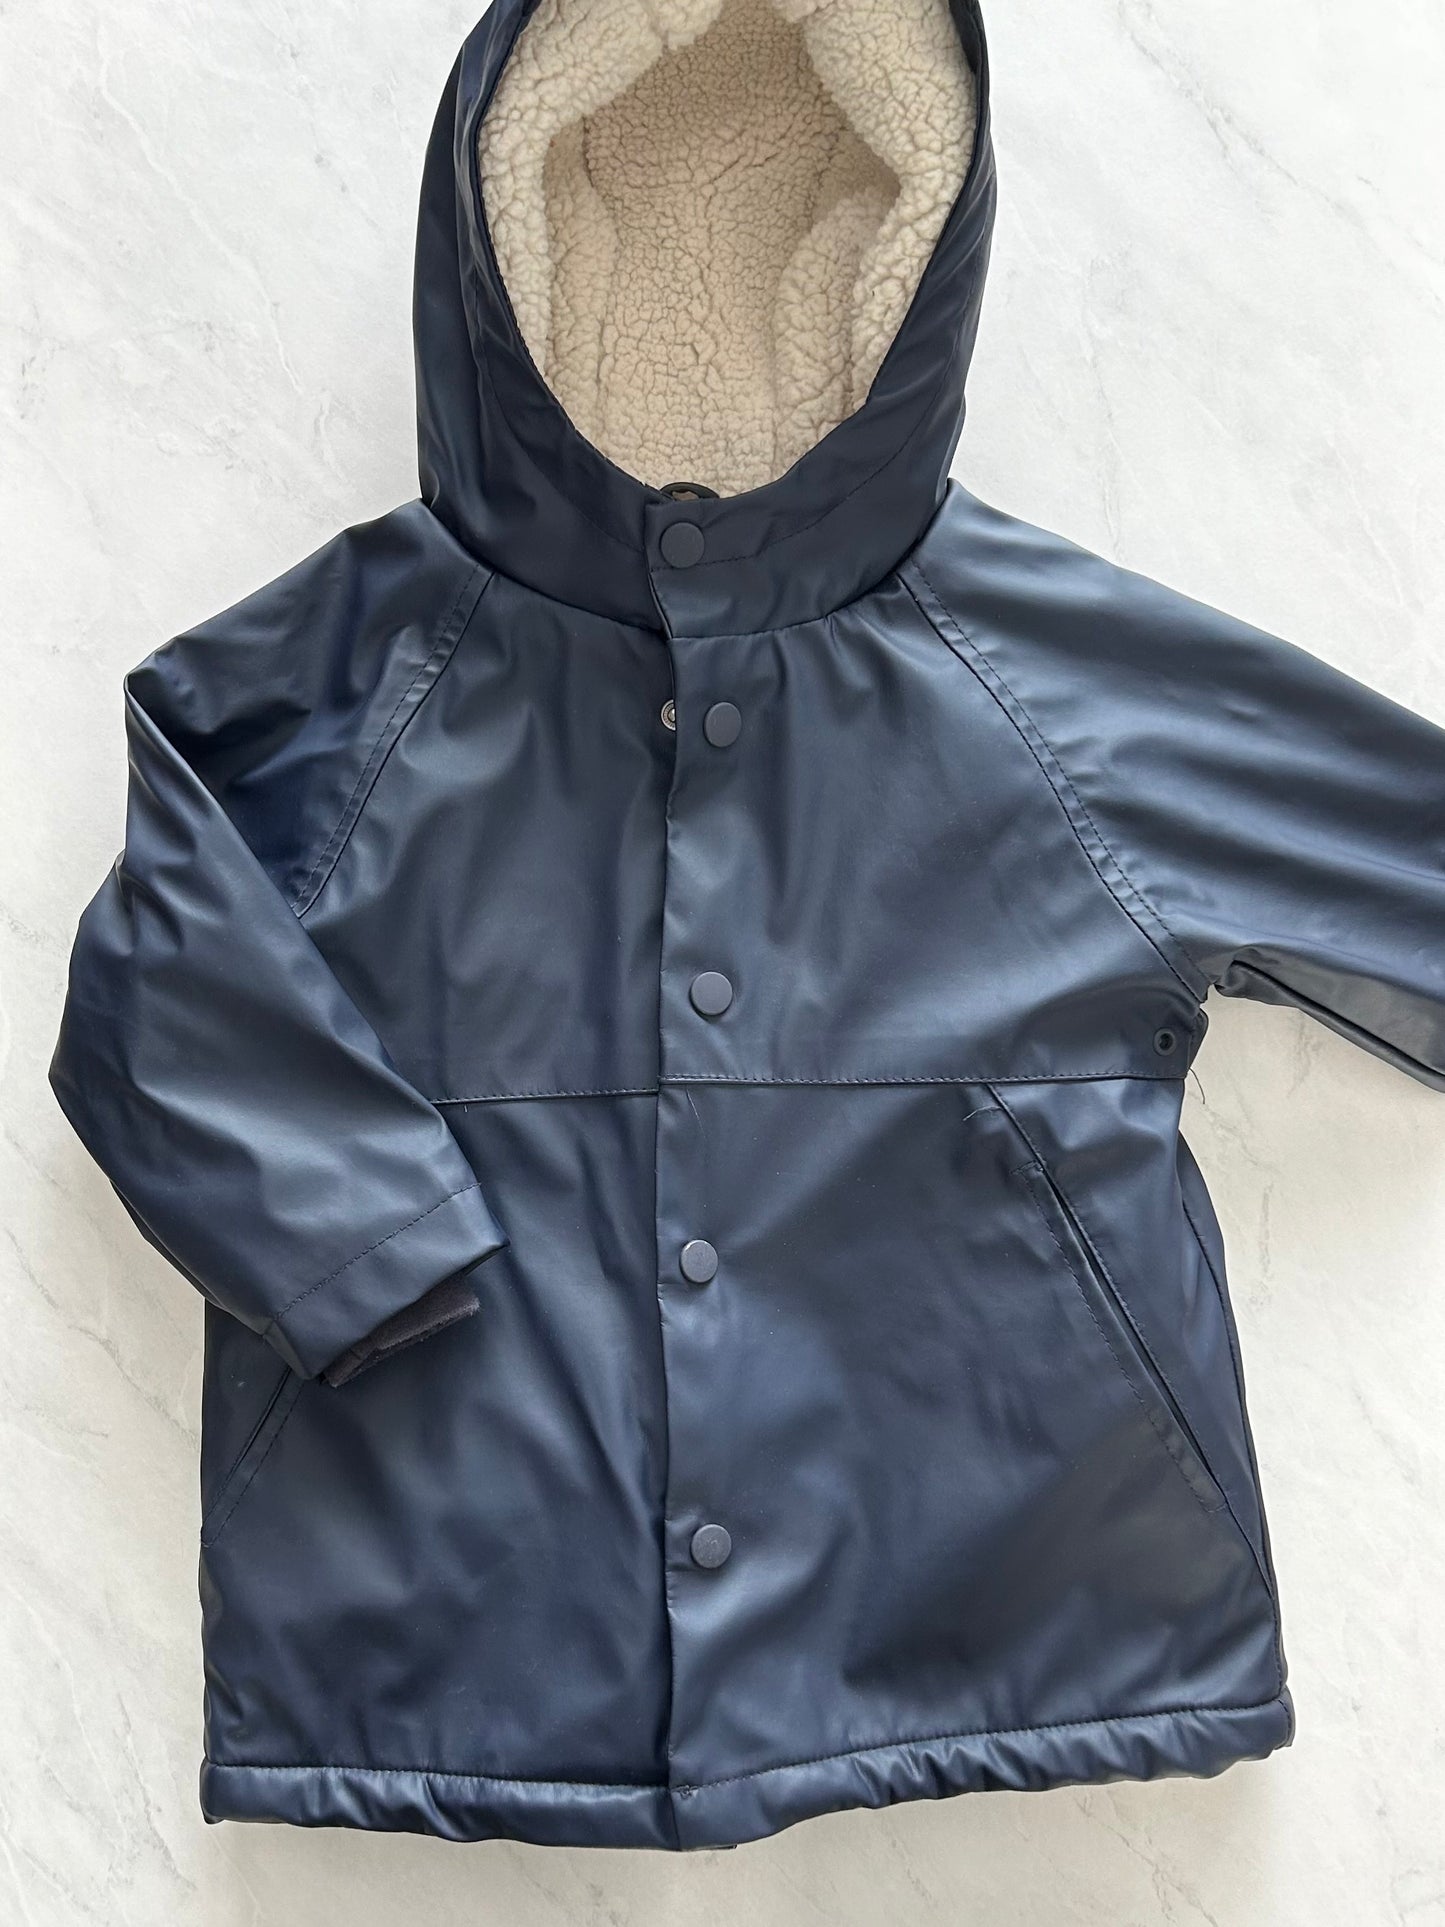 Lined waterproof coat - Zara - 12-18 months